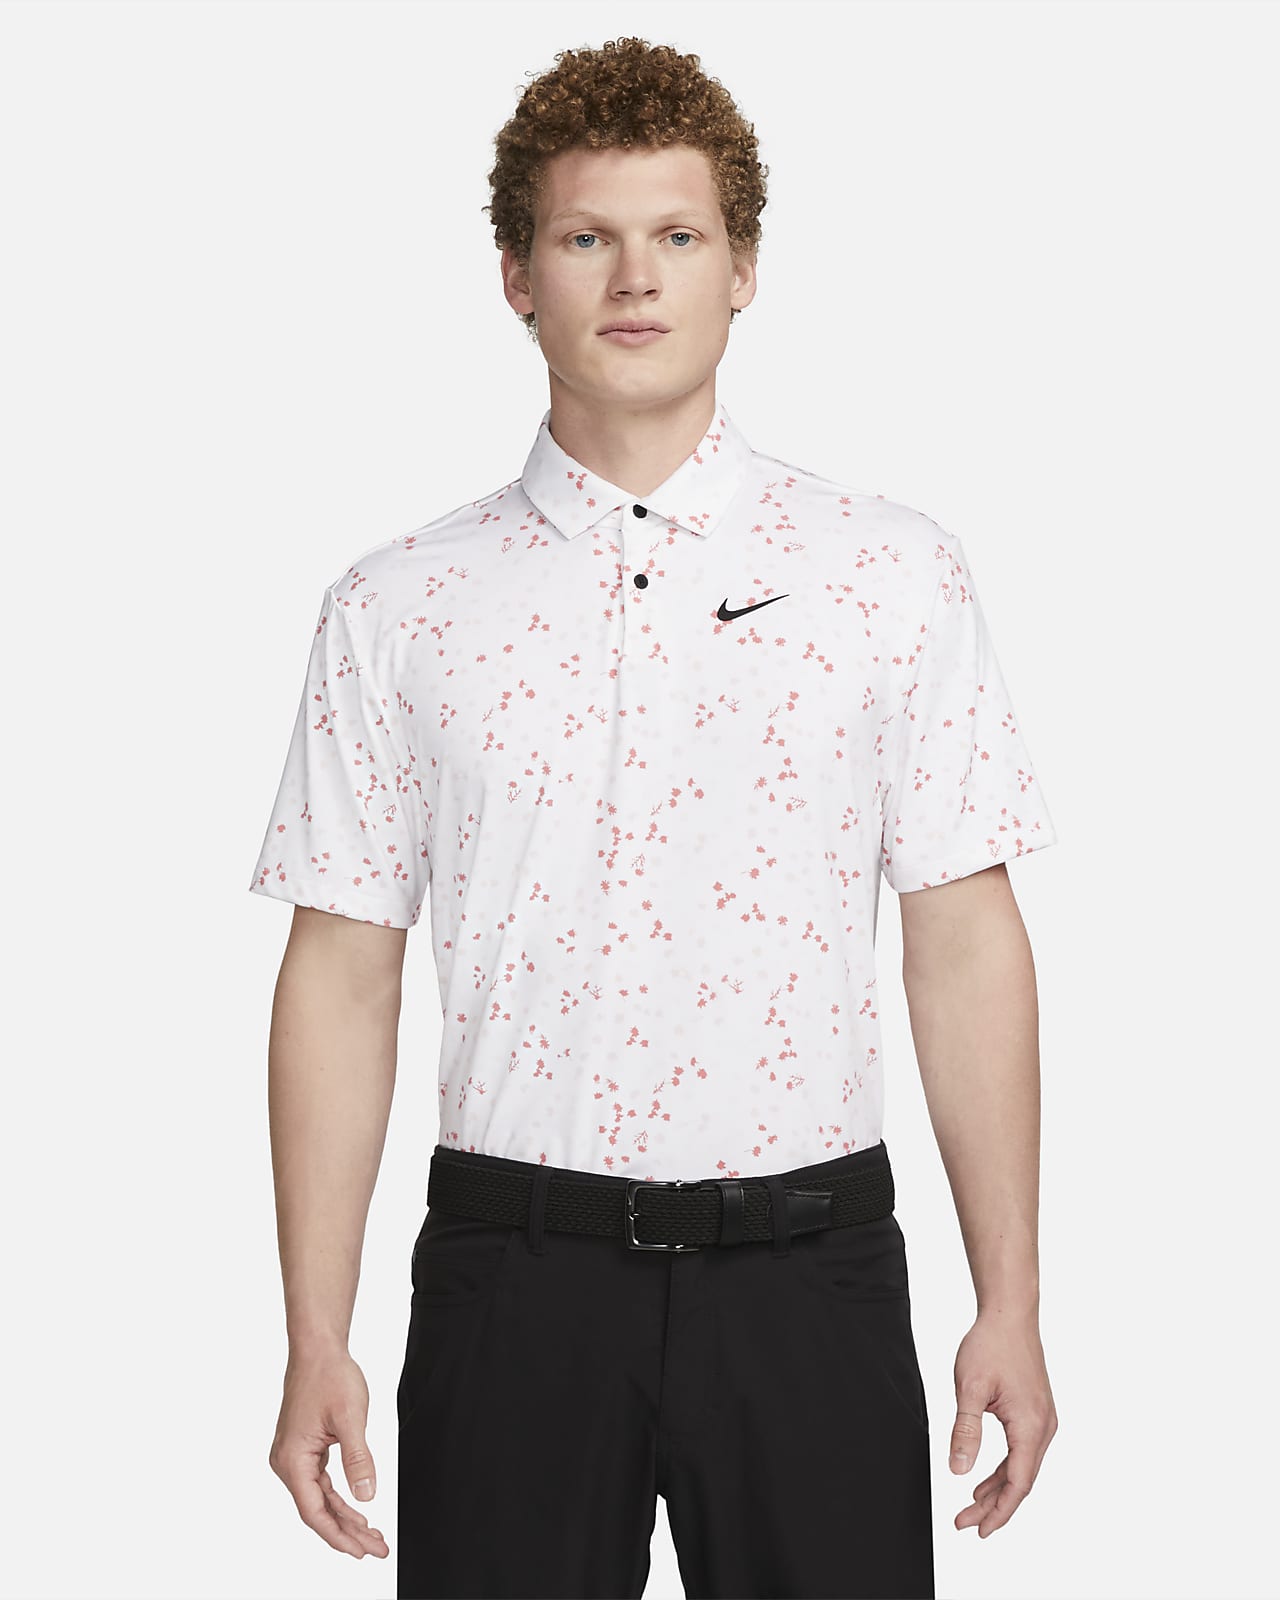 Nike Dri-FIT Tour Polo de golf con estampado floral - Hombre